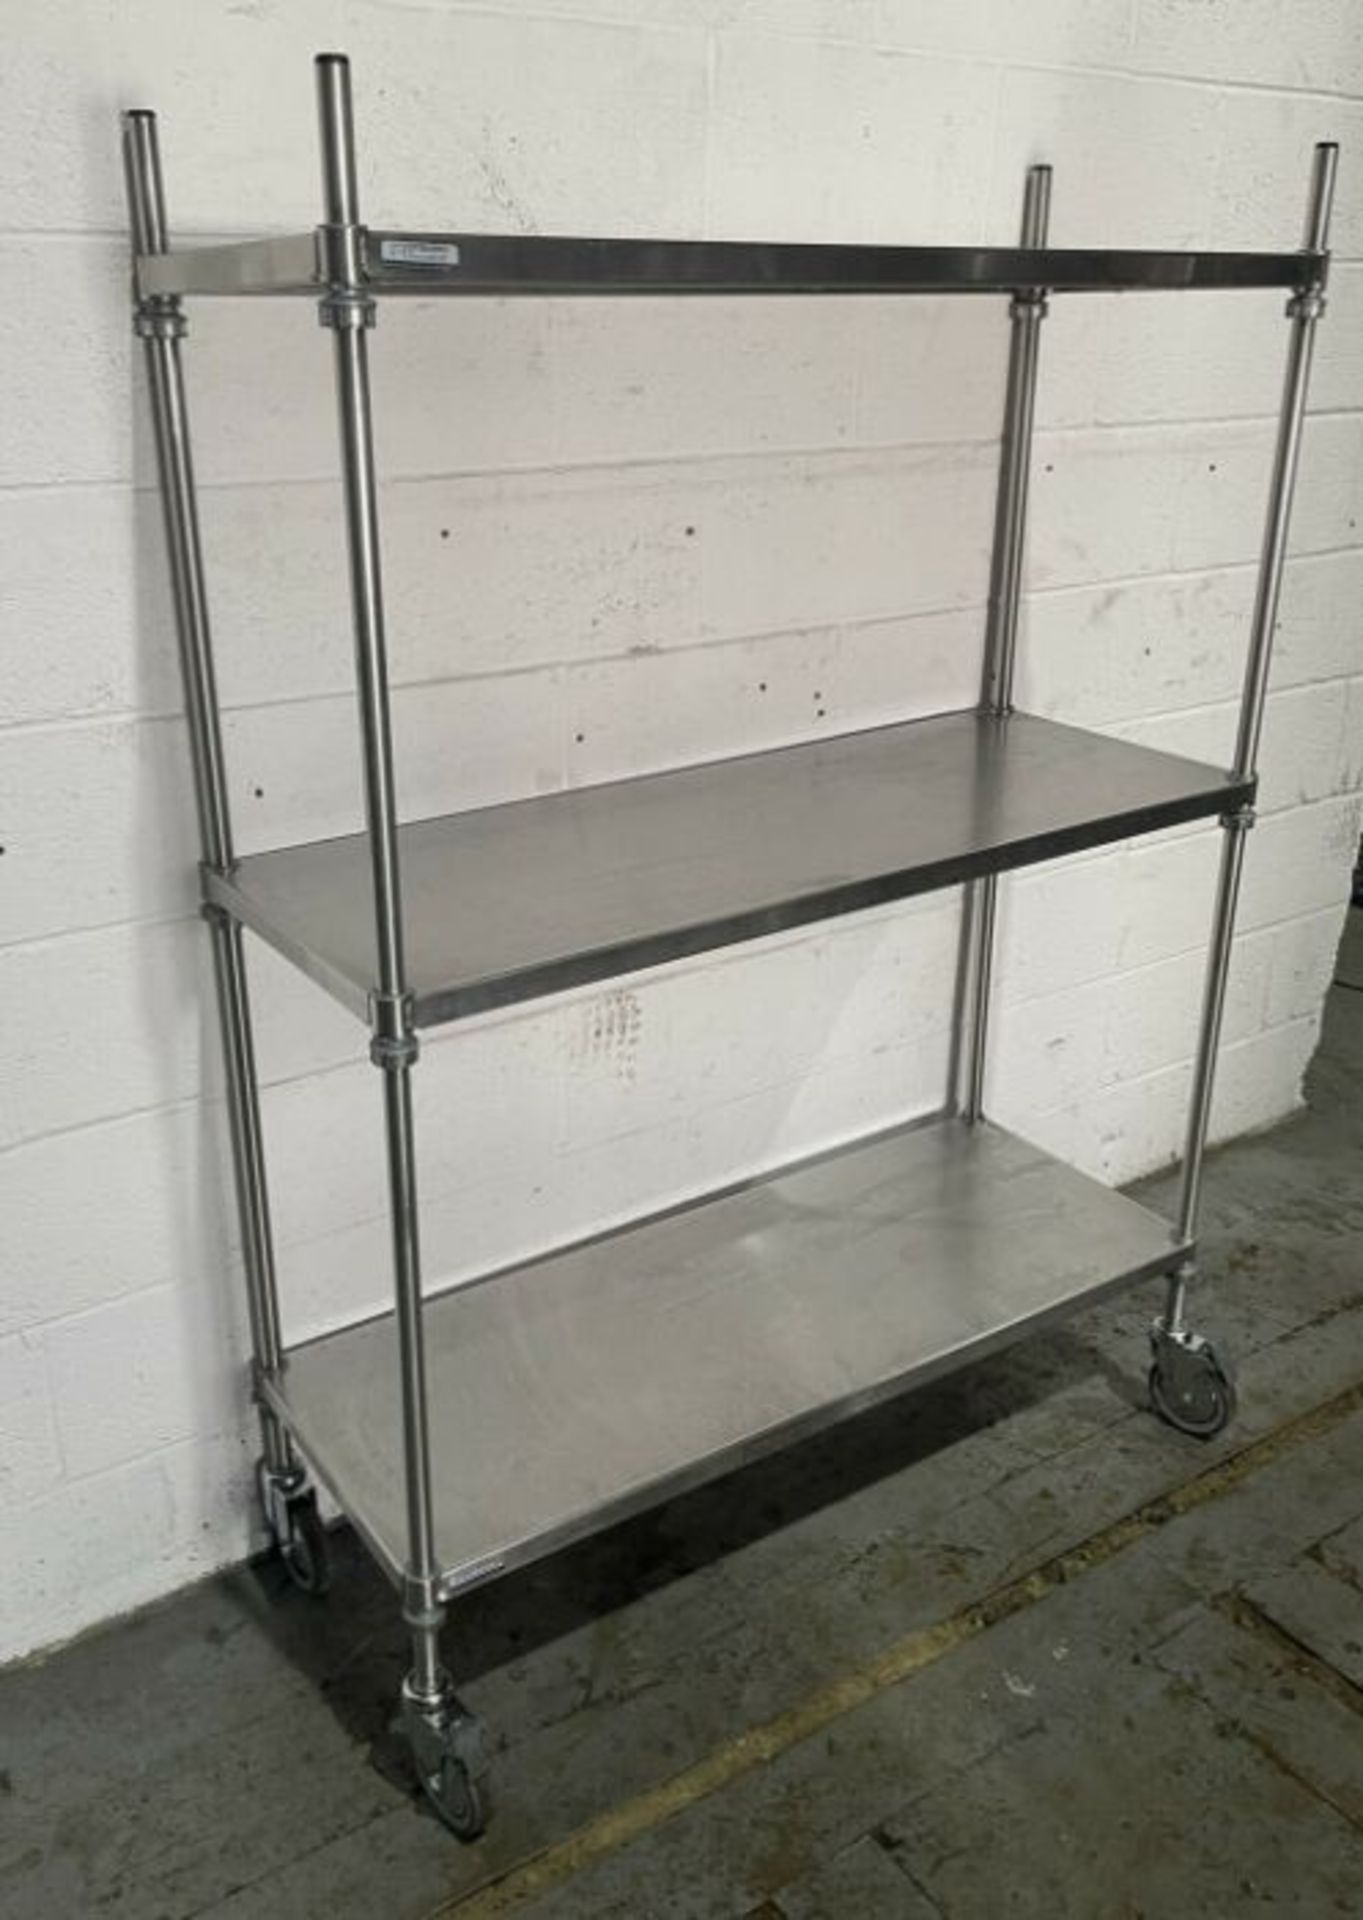 Craven Firmashelf Stainless Steel Shelf Unit - Image 3 of 4